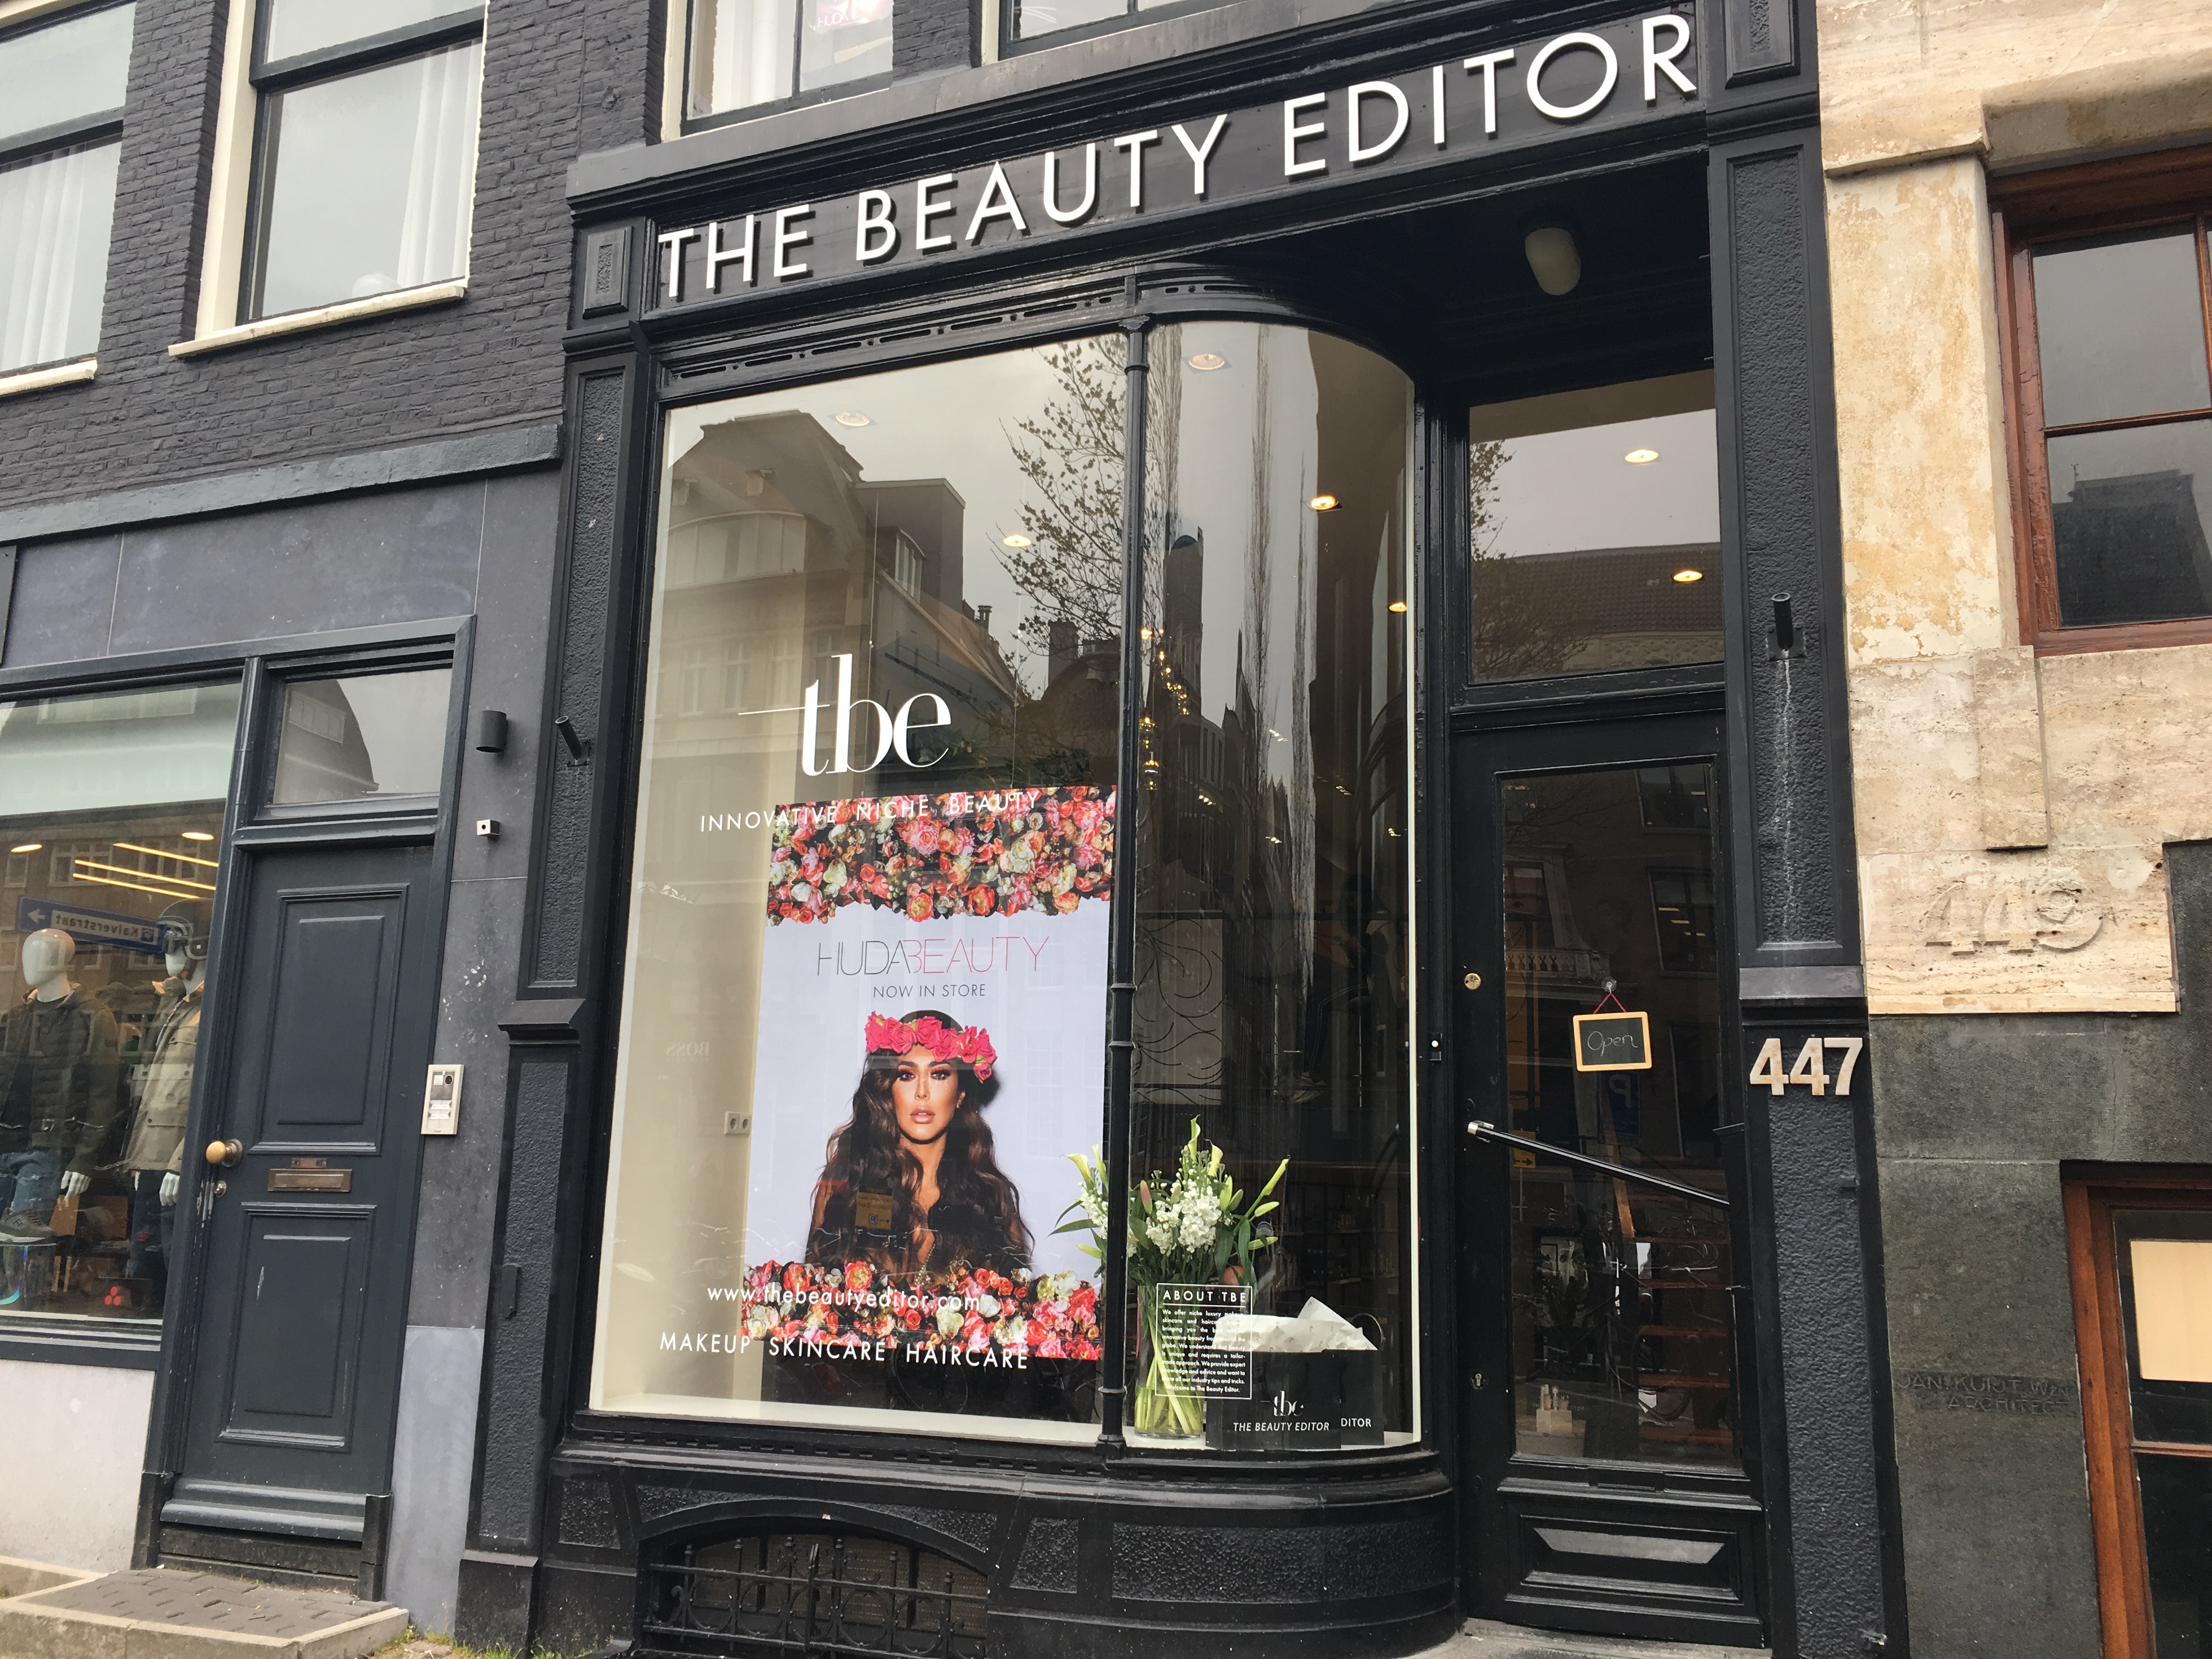 The Beauty Editor